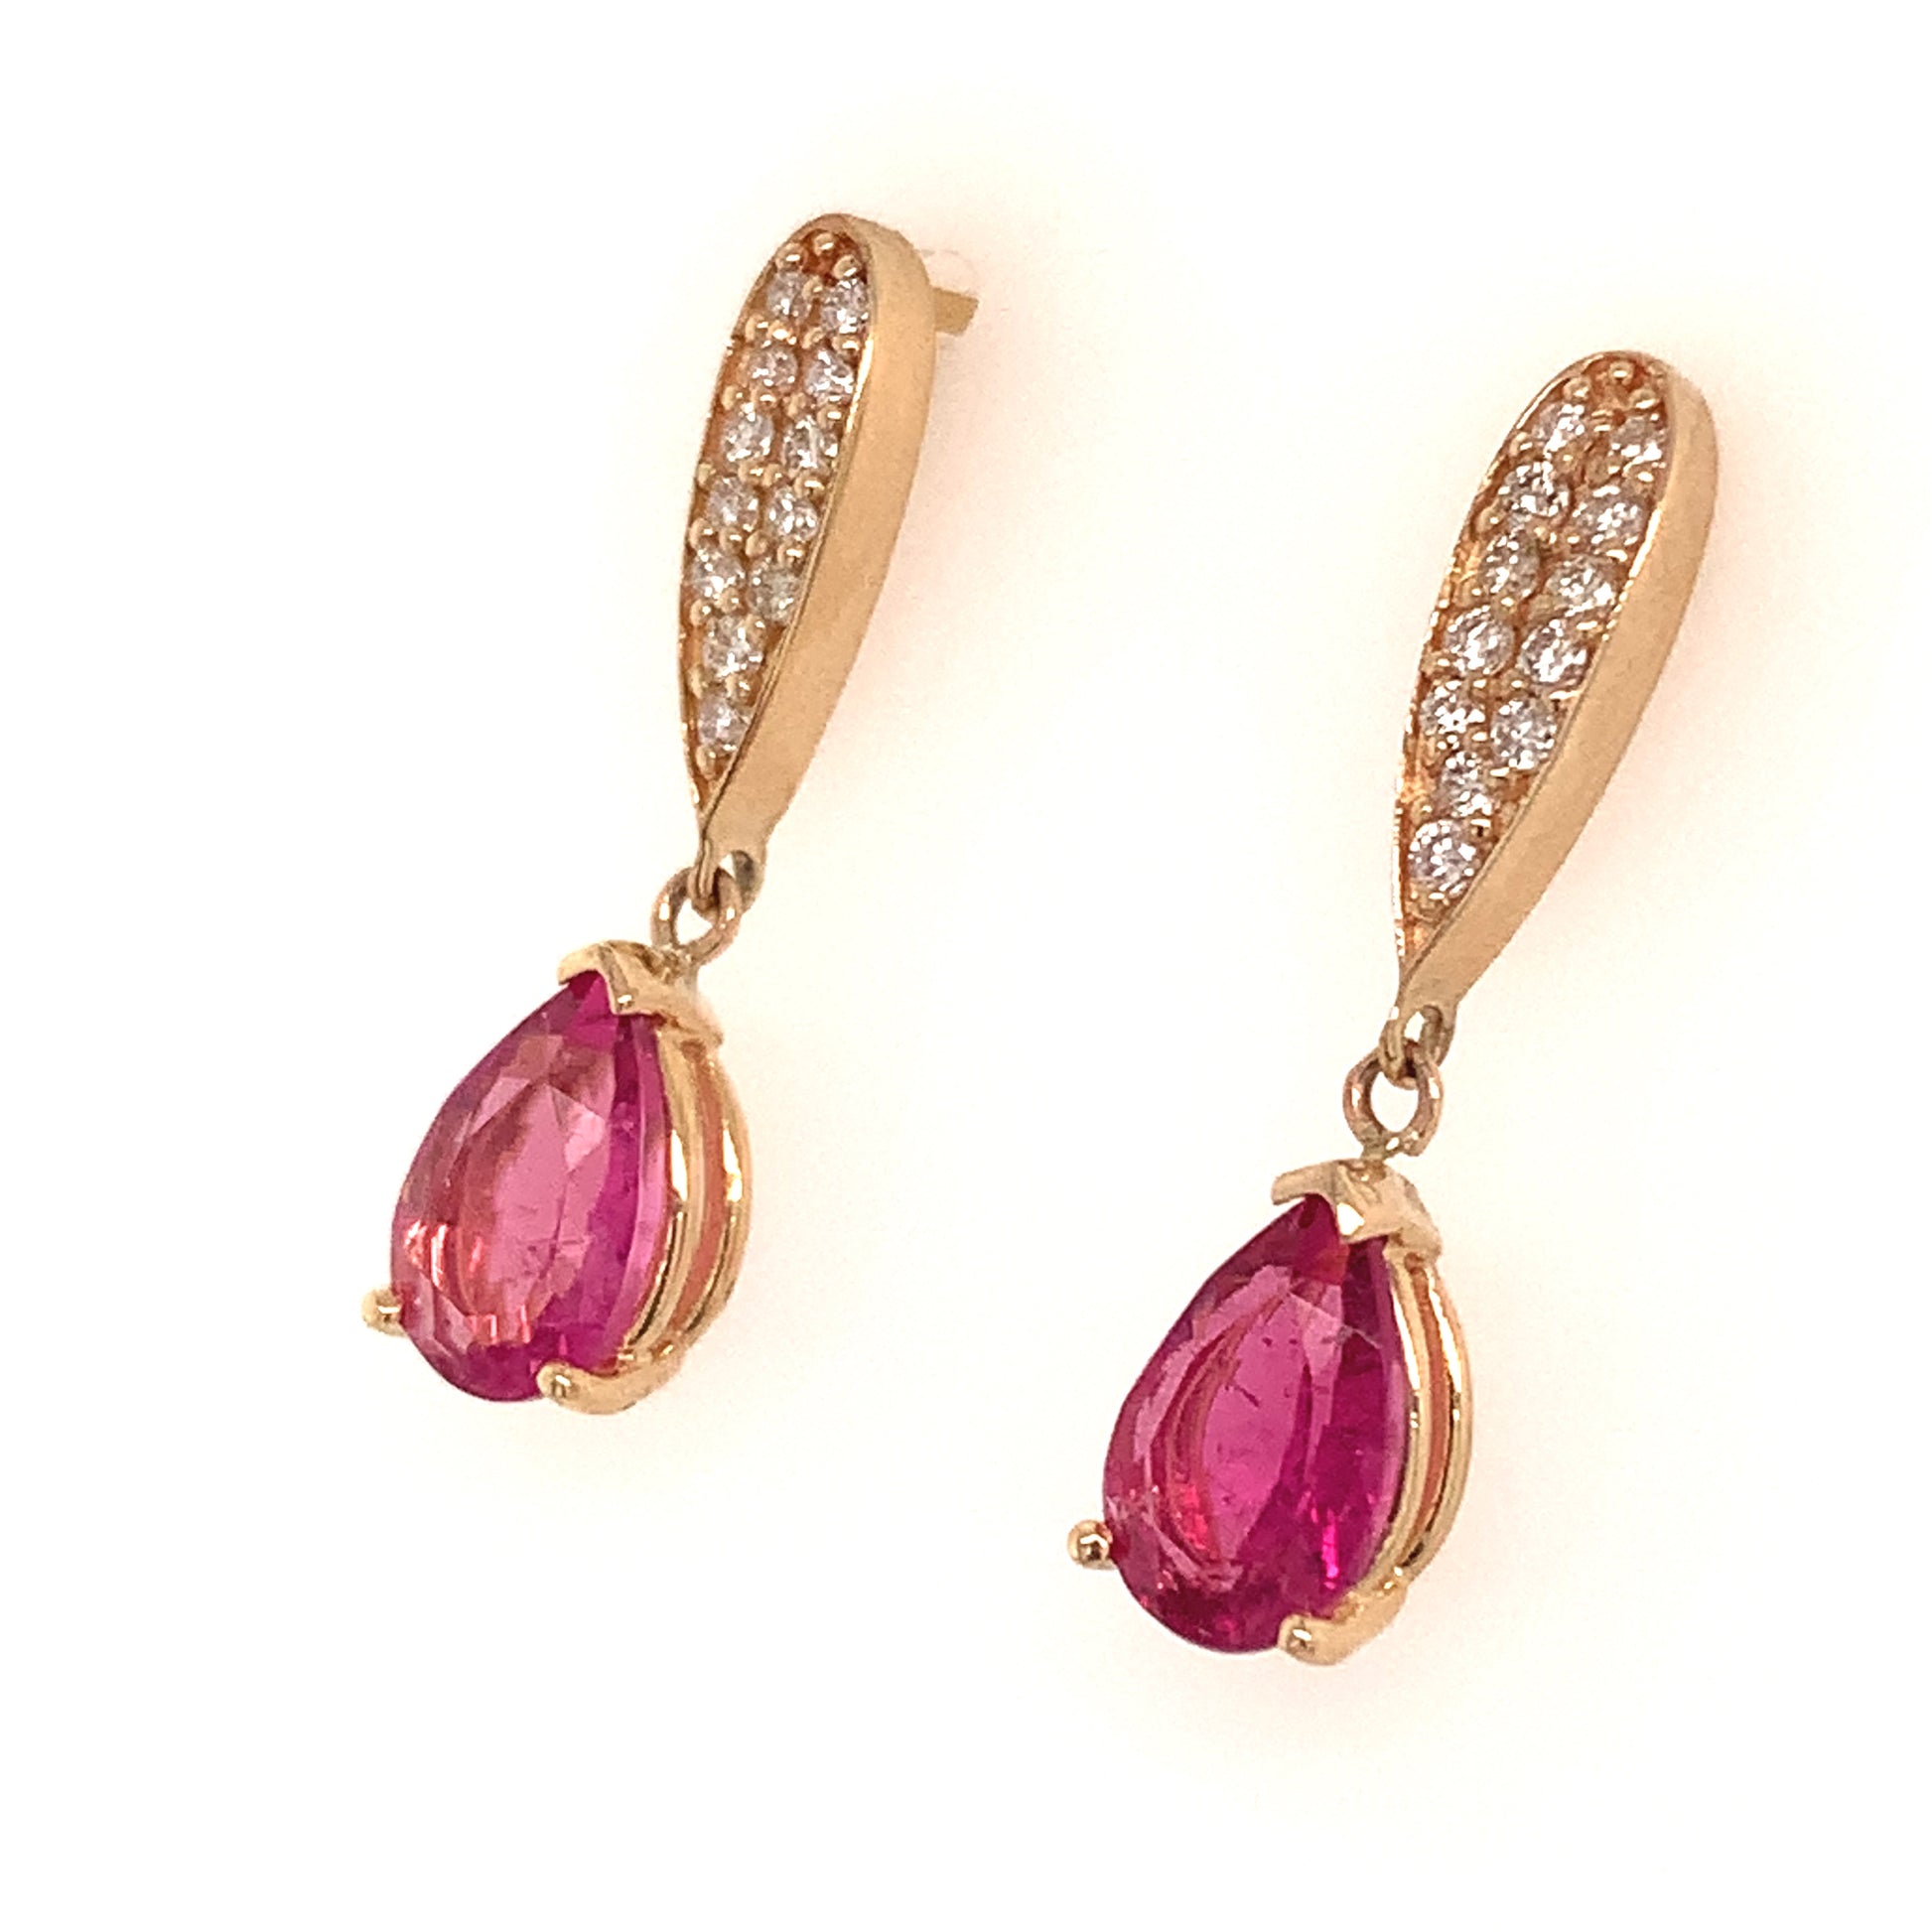 Natural Tourmaline Rubellite Diamond Earrings 14k Gold 1.60 TCW Certified $3,090 018673 - Certified Fine Jewelry